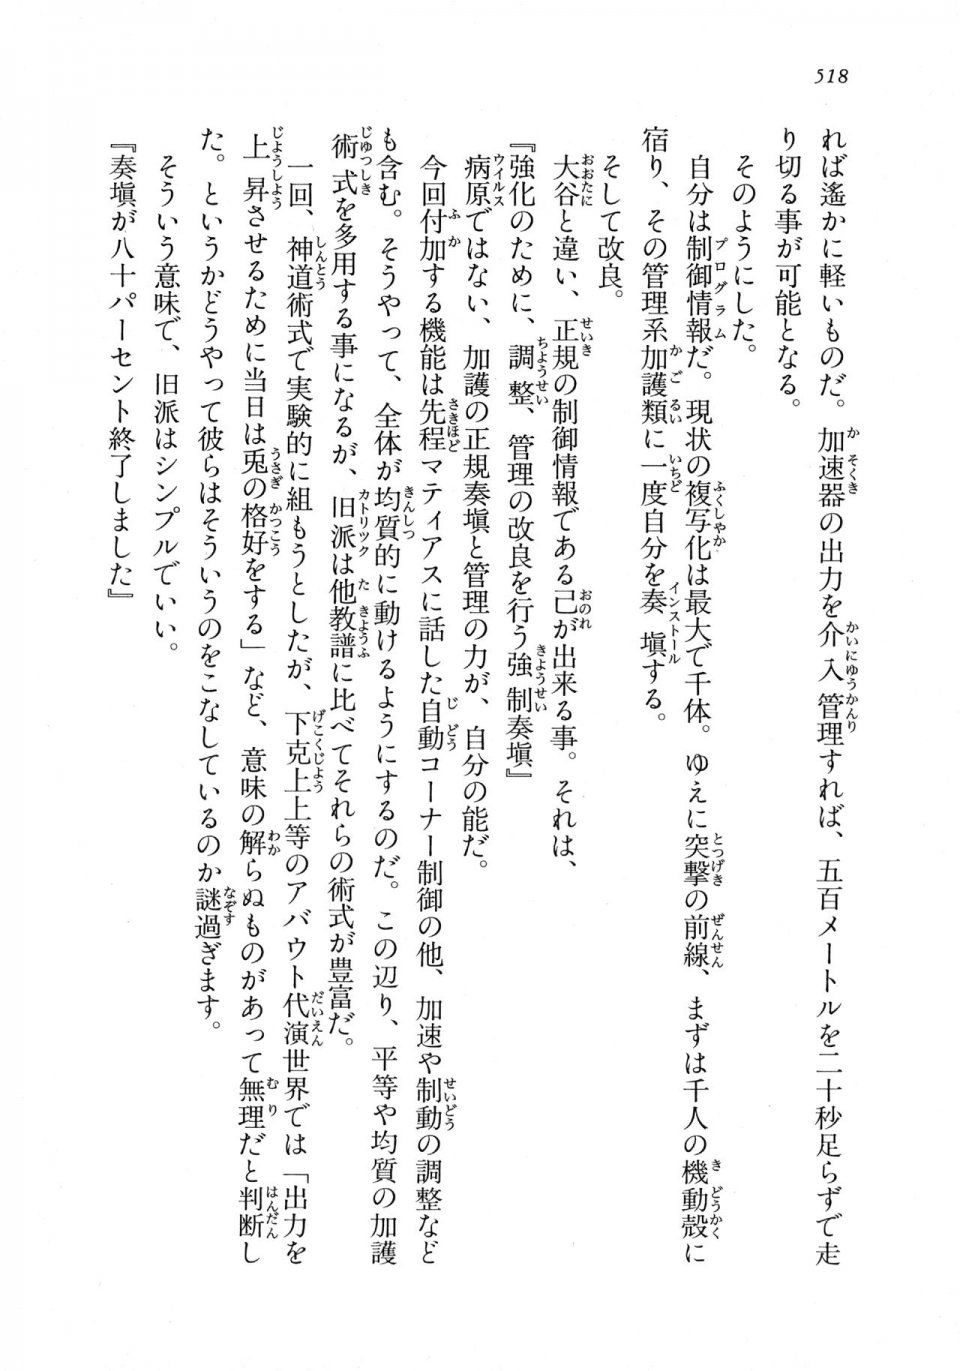 Kyoukai Senjou no Horizon LN Vol 18(7C) Part 1 - Photo #518